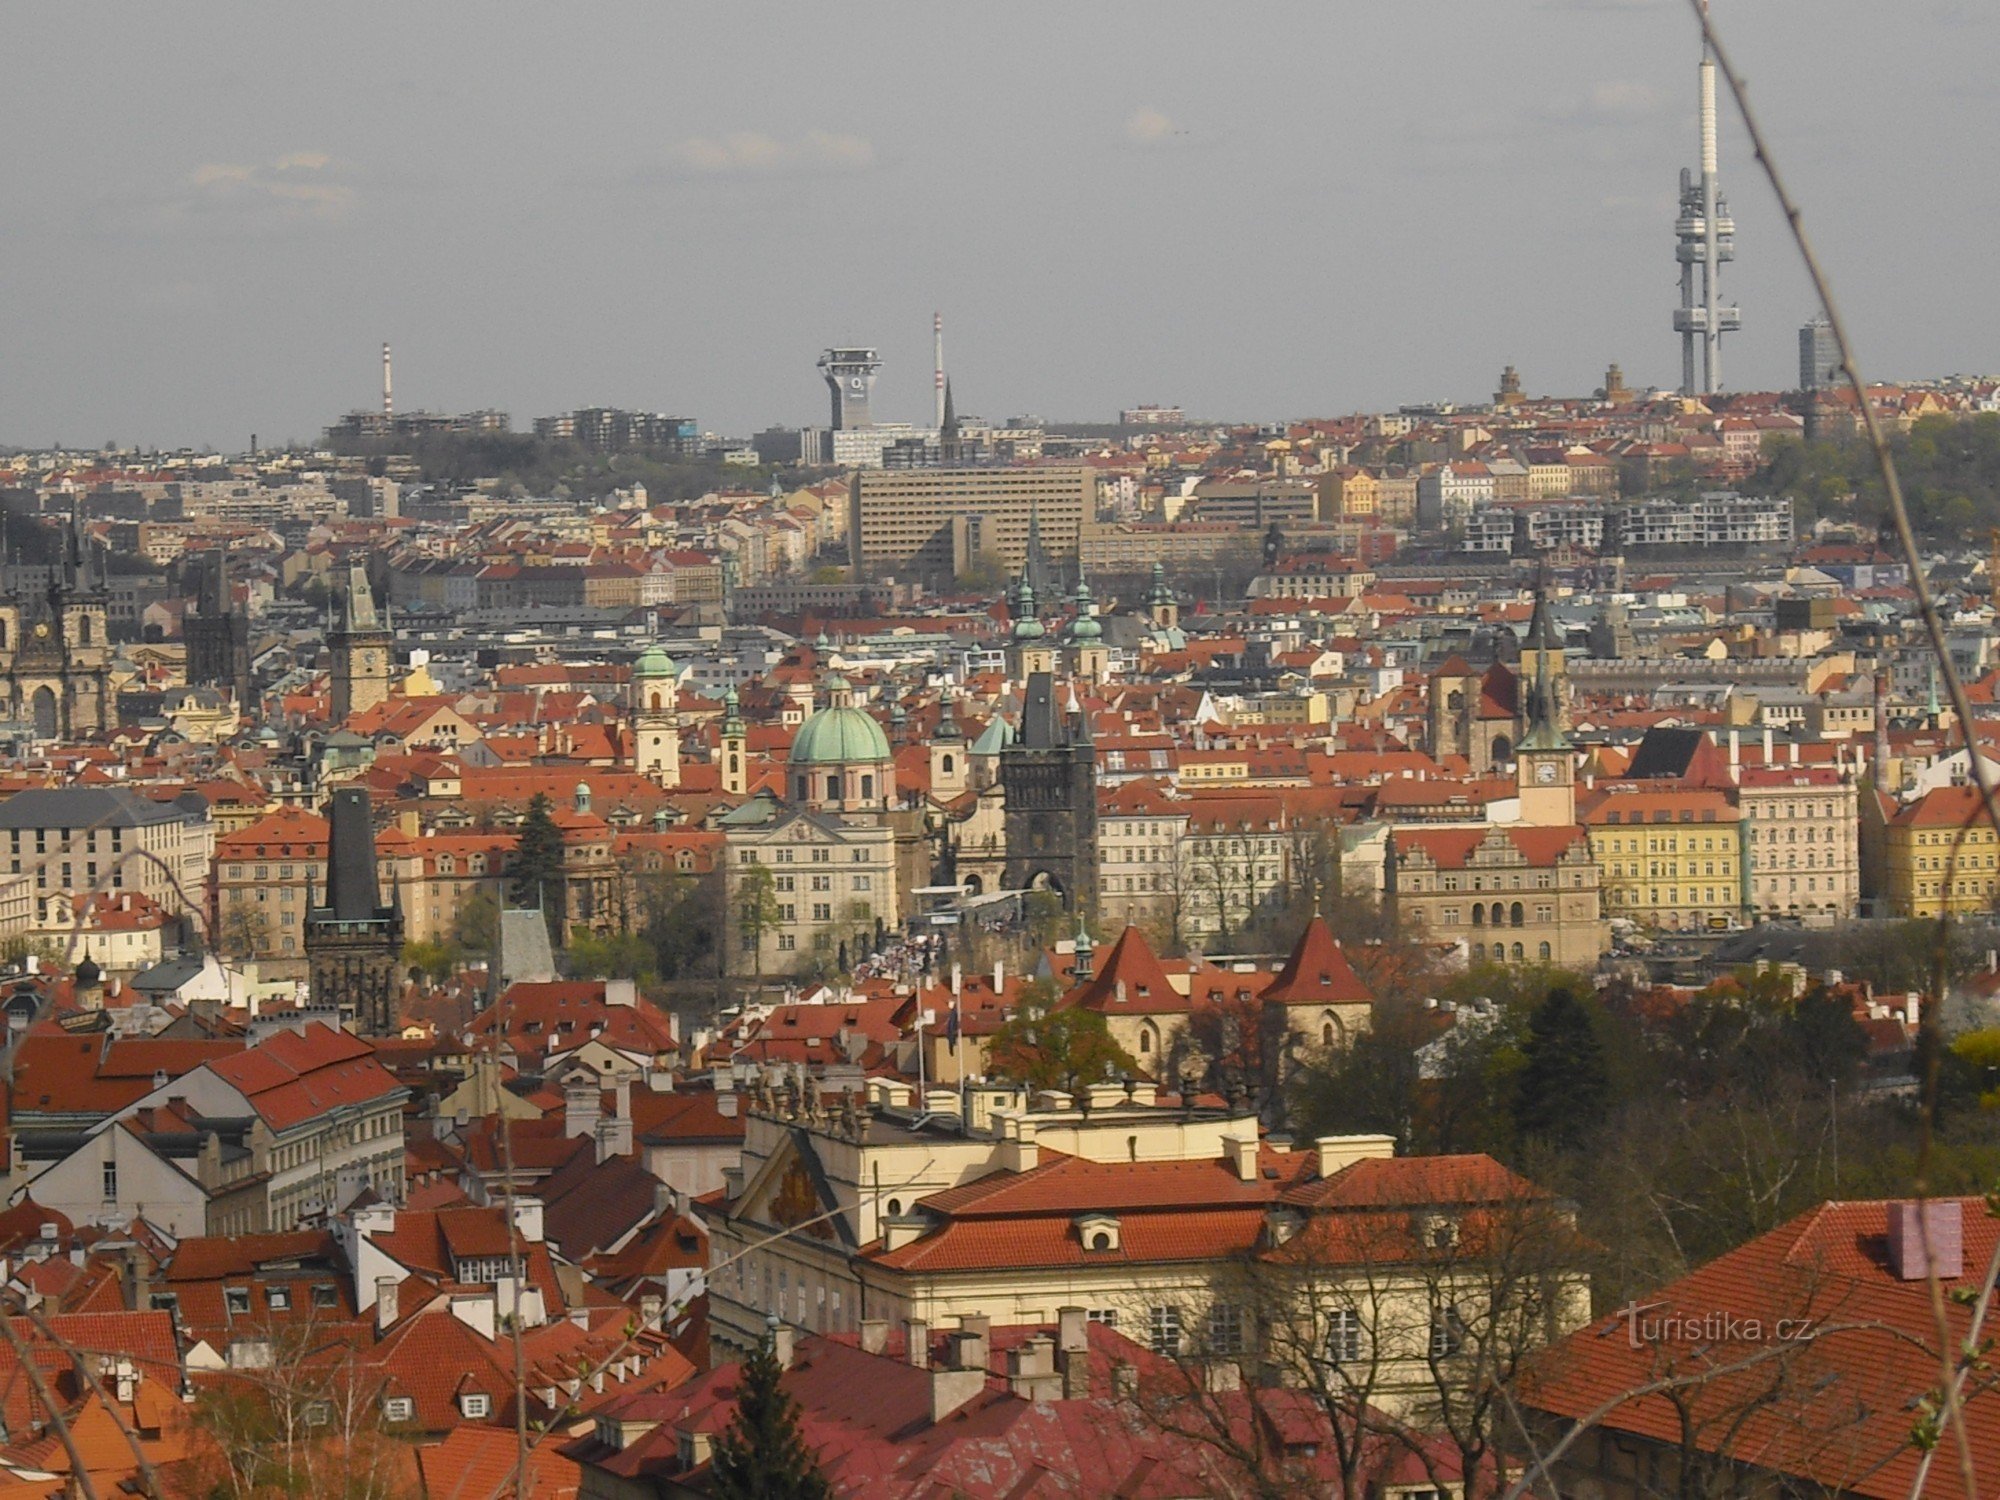 Huvudstaden i Prag